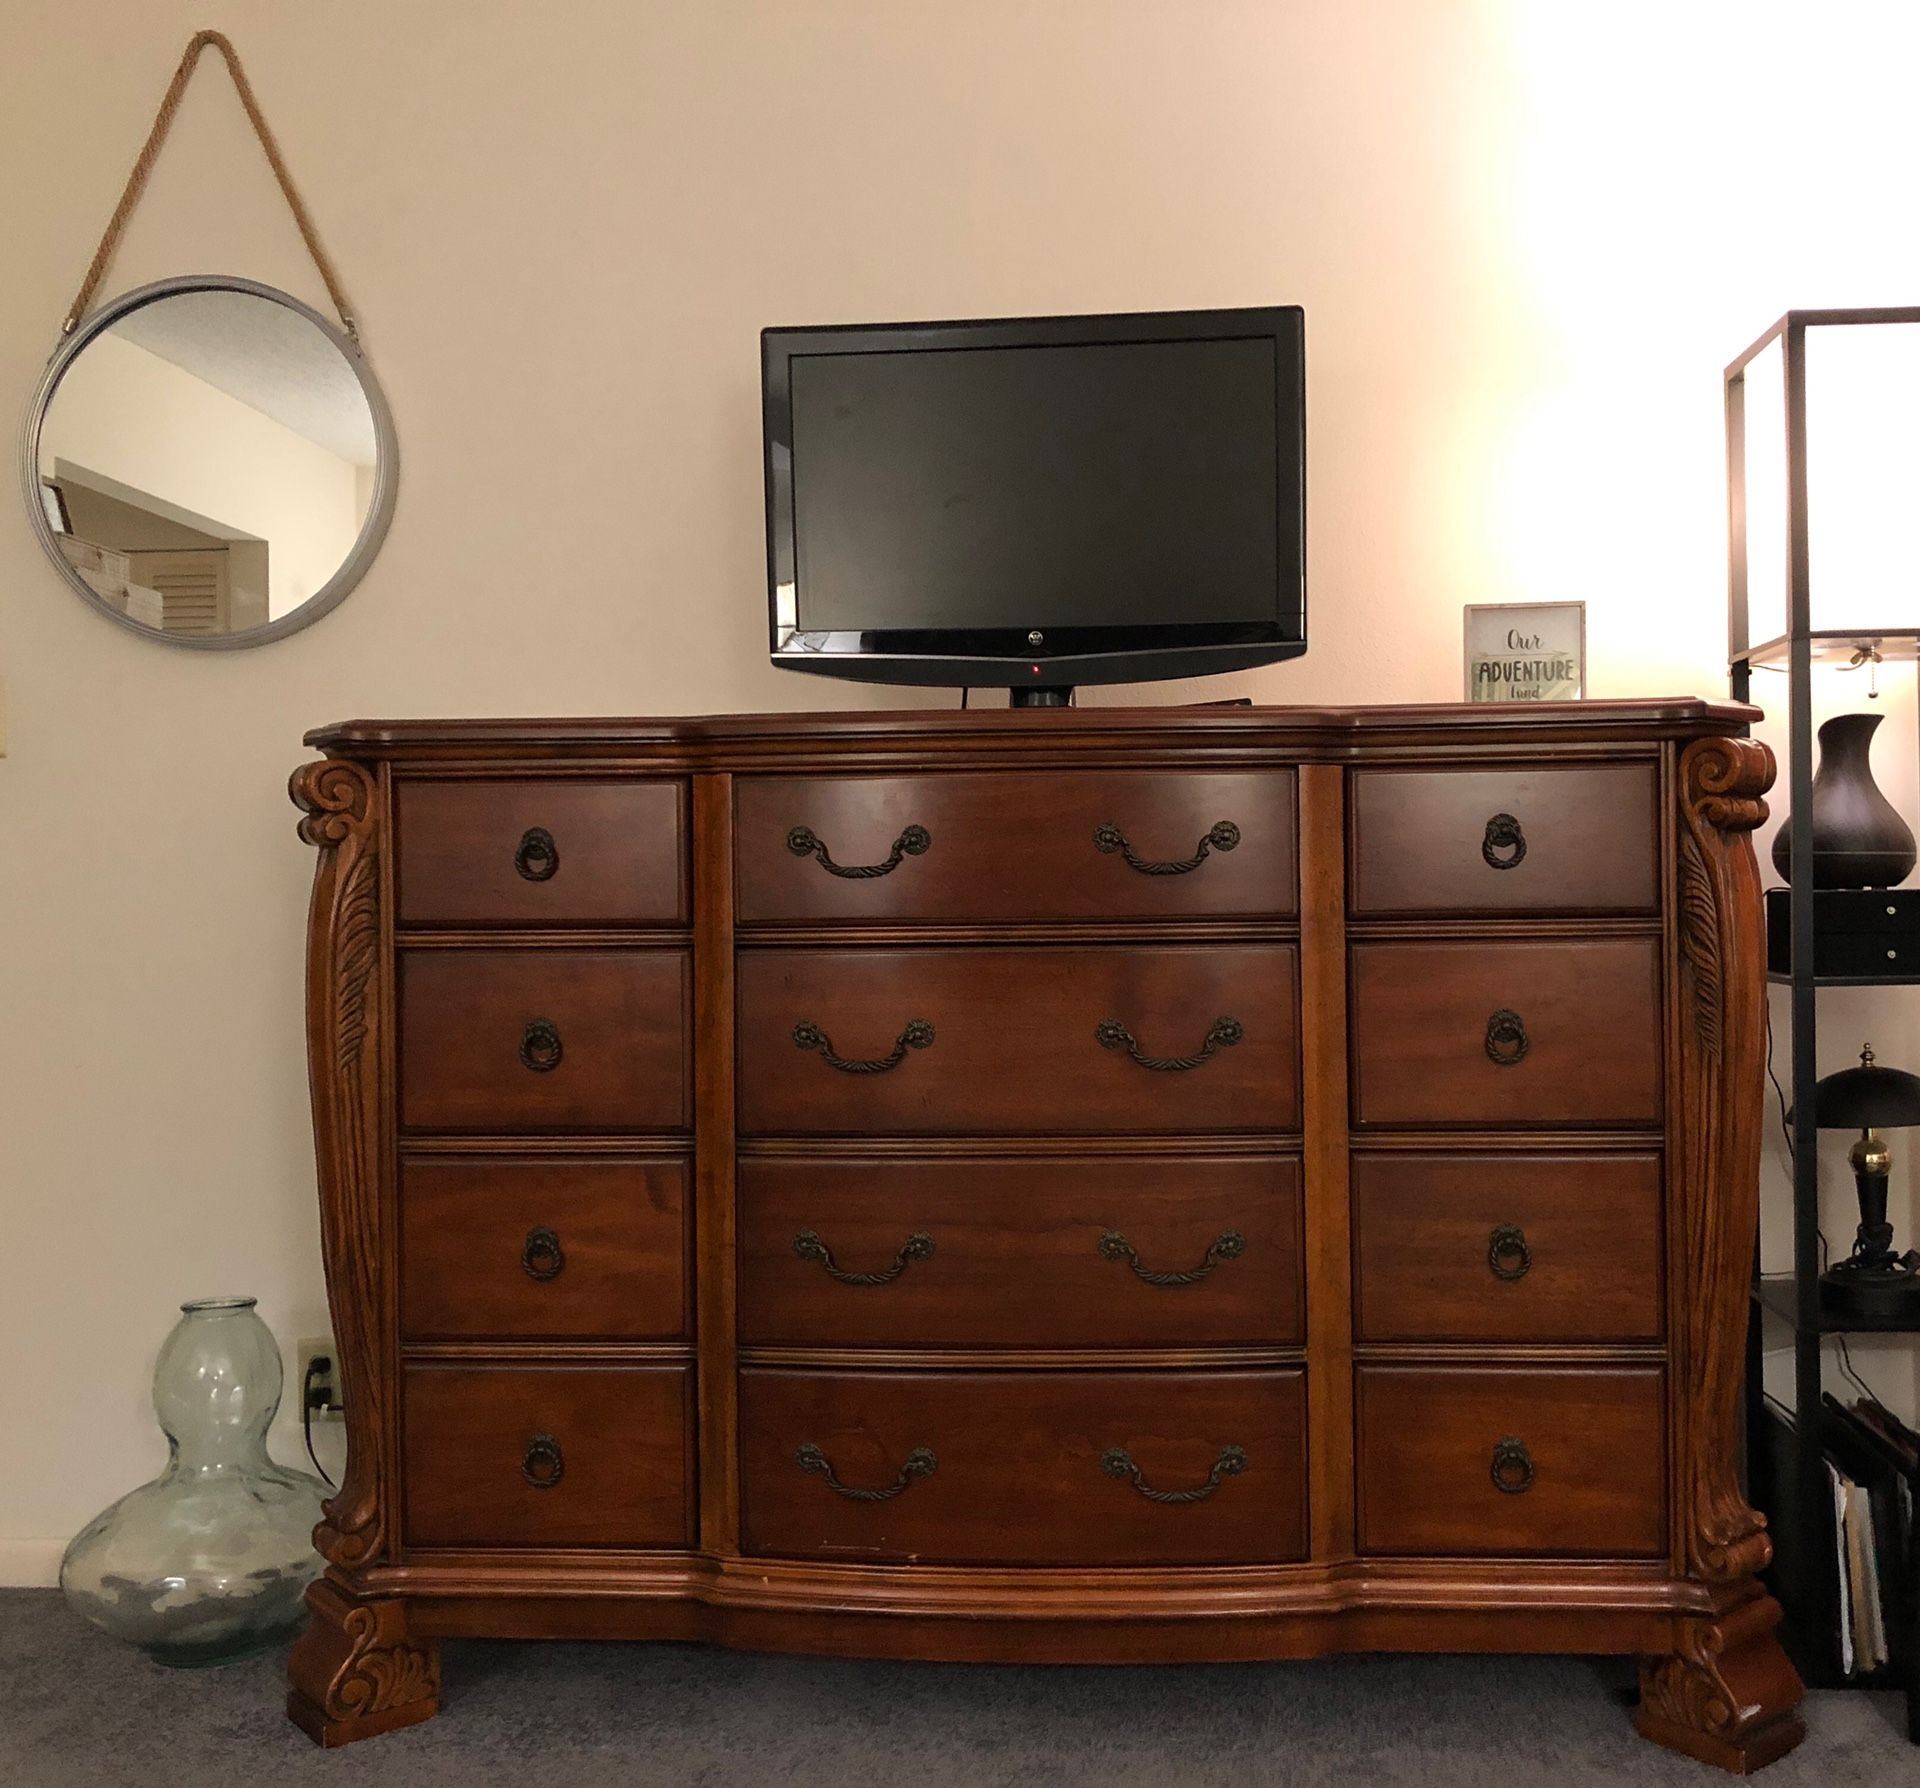 Solid wood Dressor ( bedroom furniture tv stand living room accent table storage shelf )